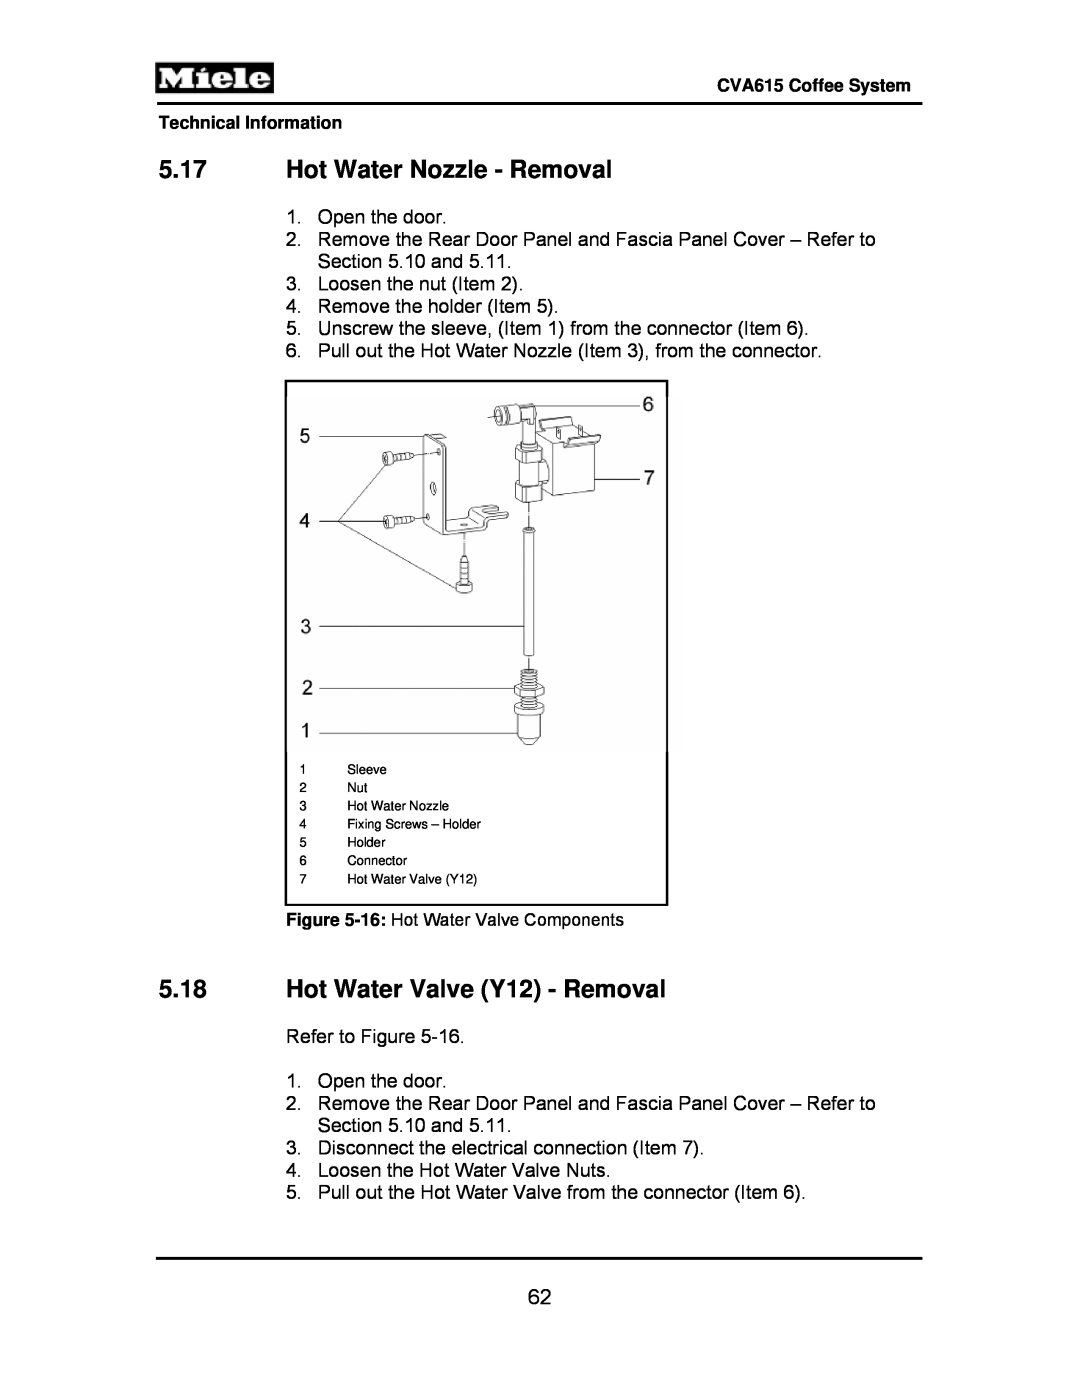 Miele CVA615 manual 5.17Hot Water Nozzle - Removal, 5.18Hot Water Valve Y12 - Removal 